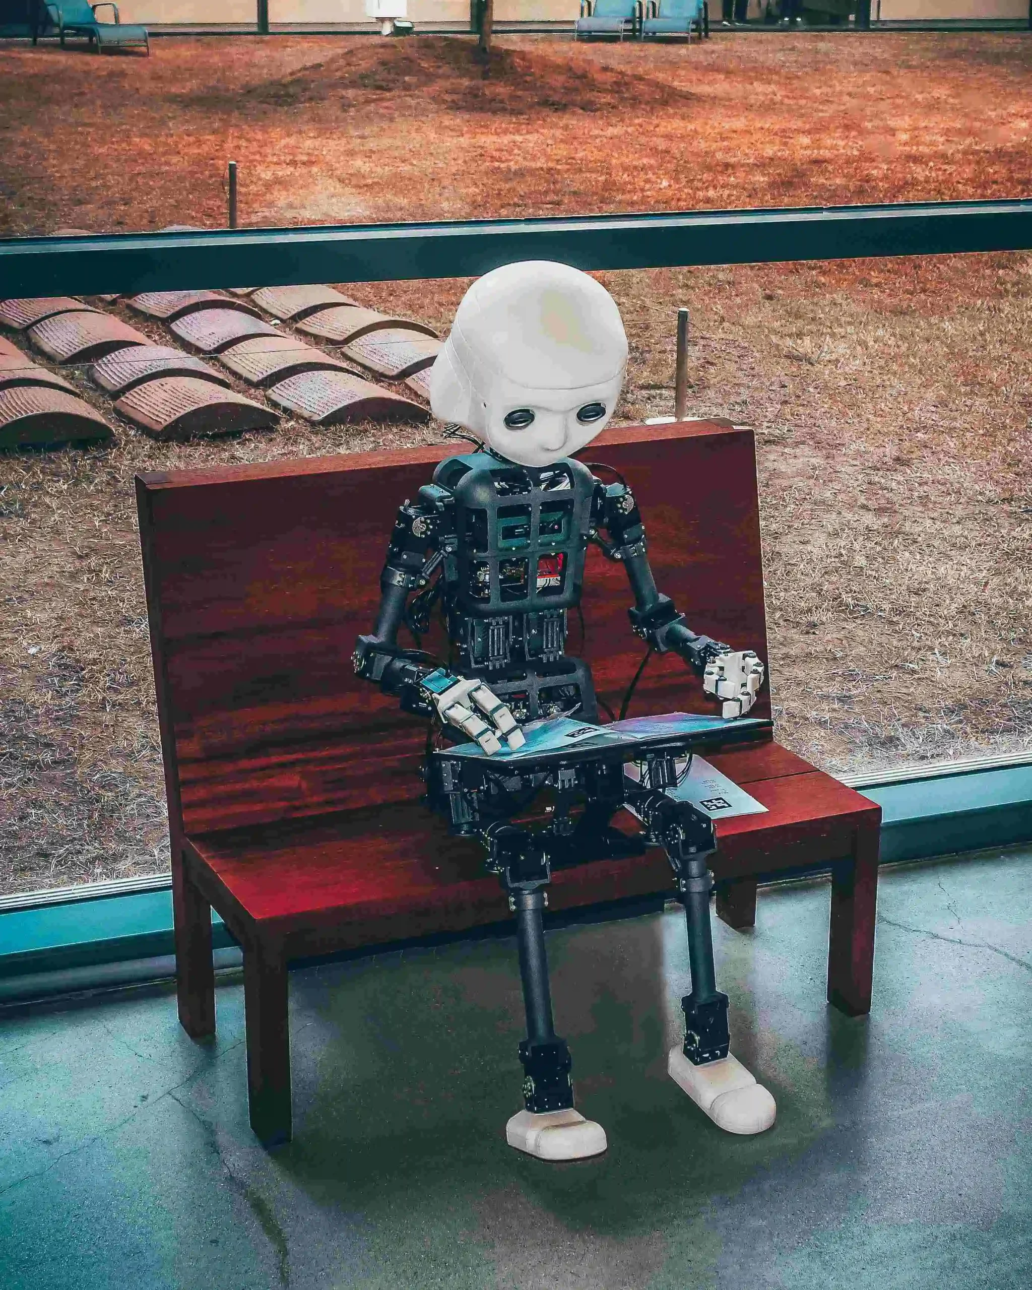 A robot reading digital information